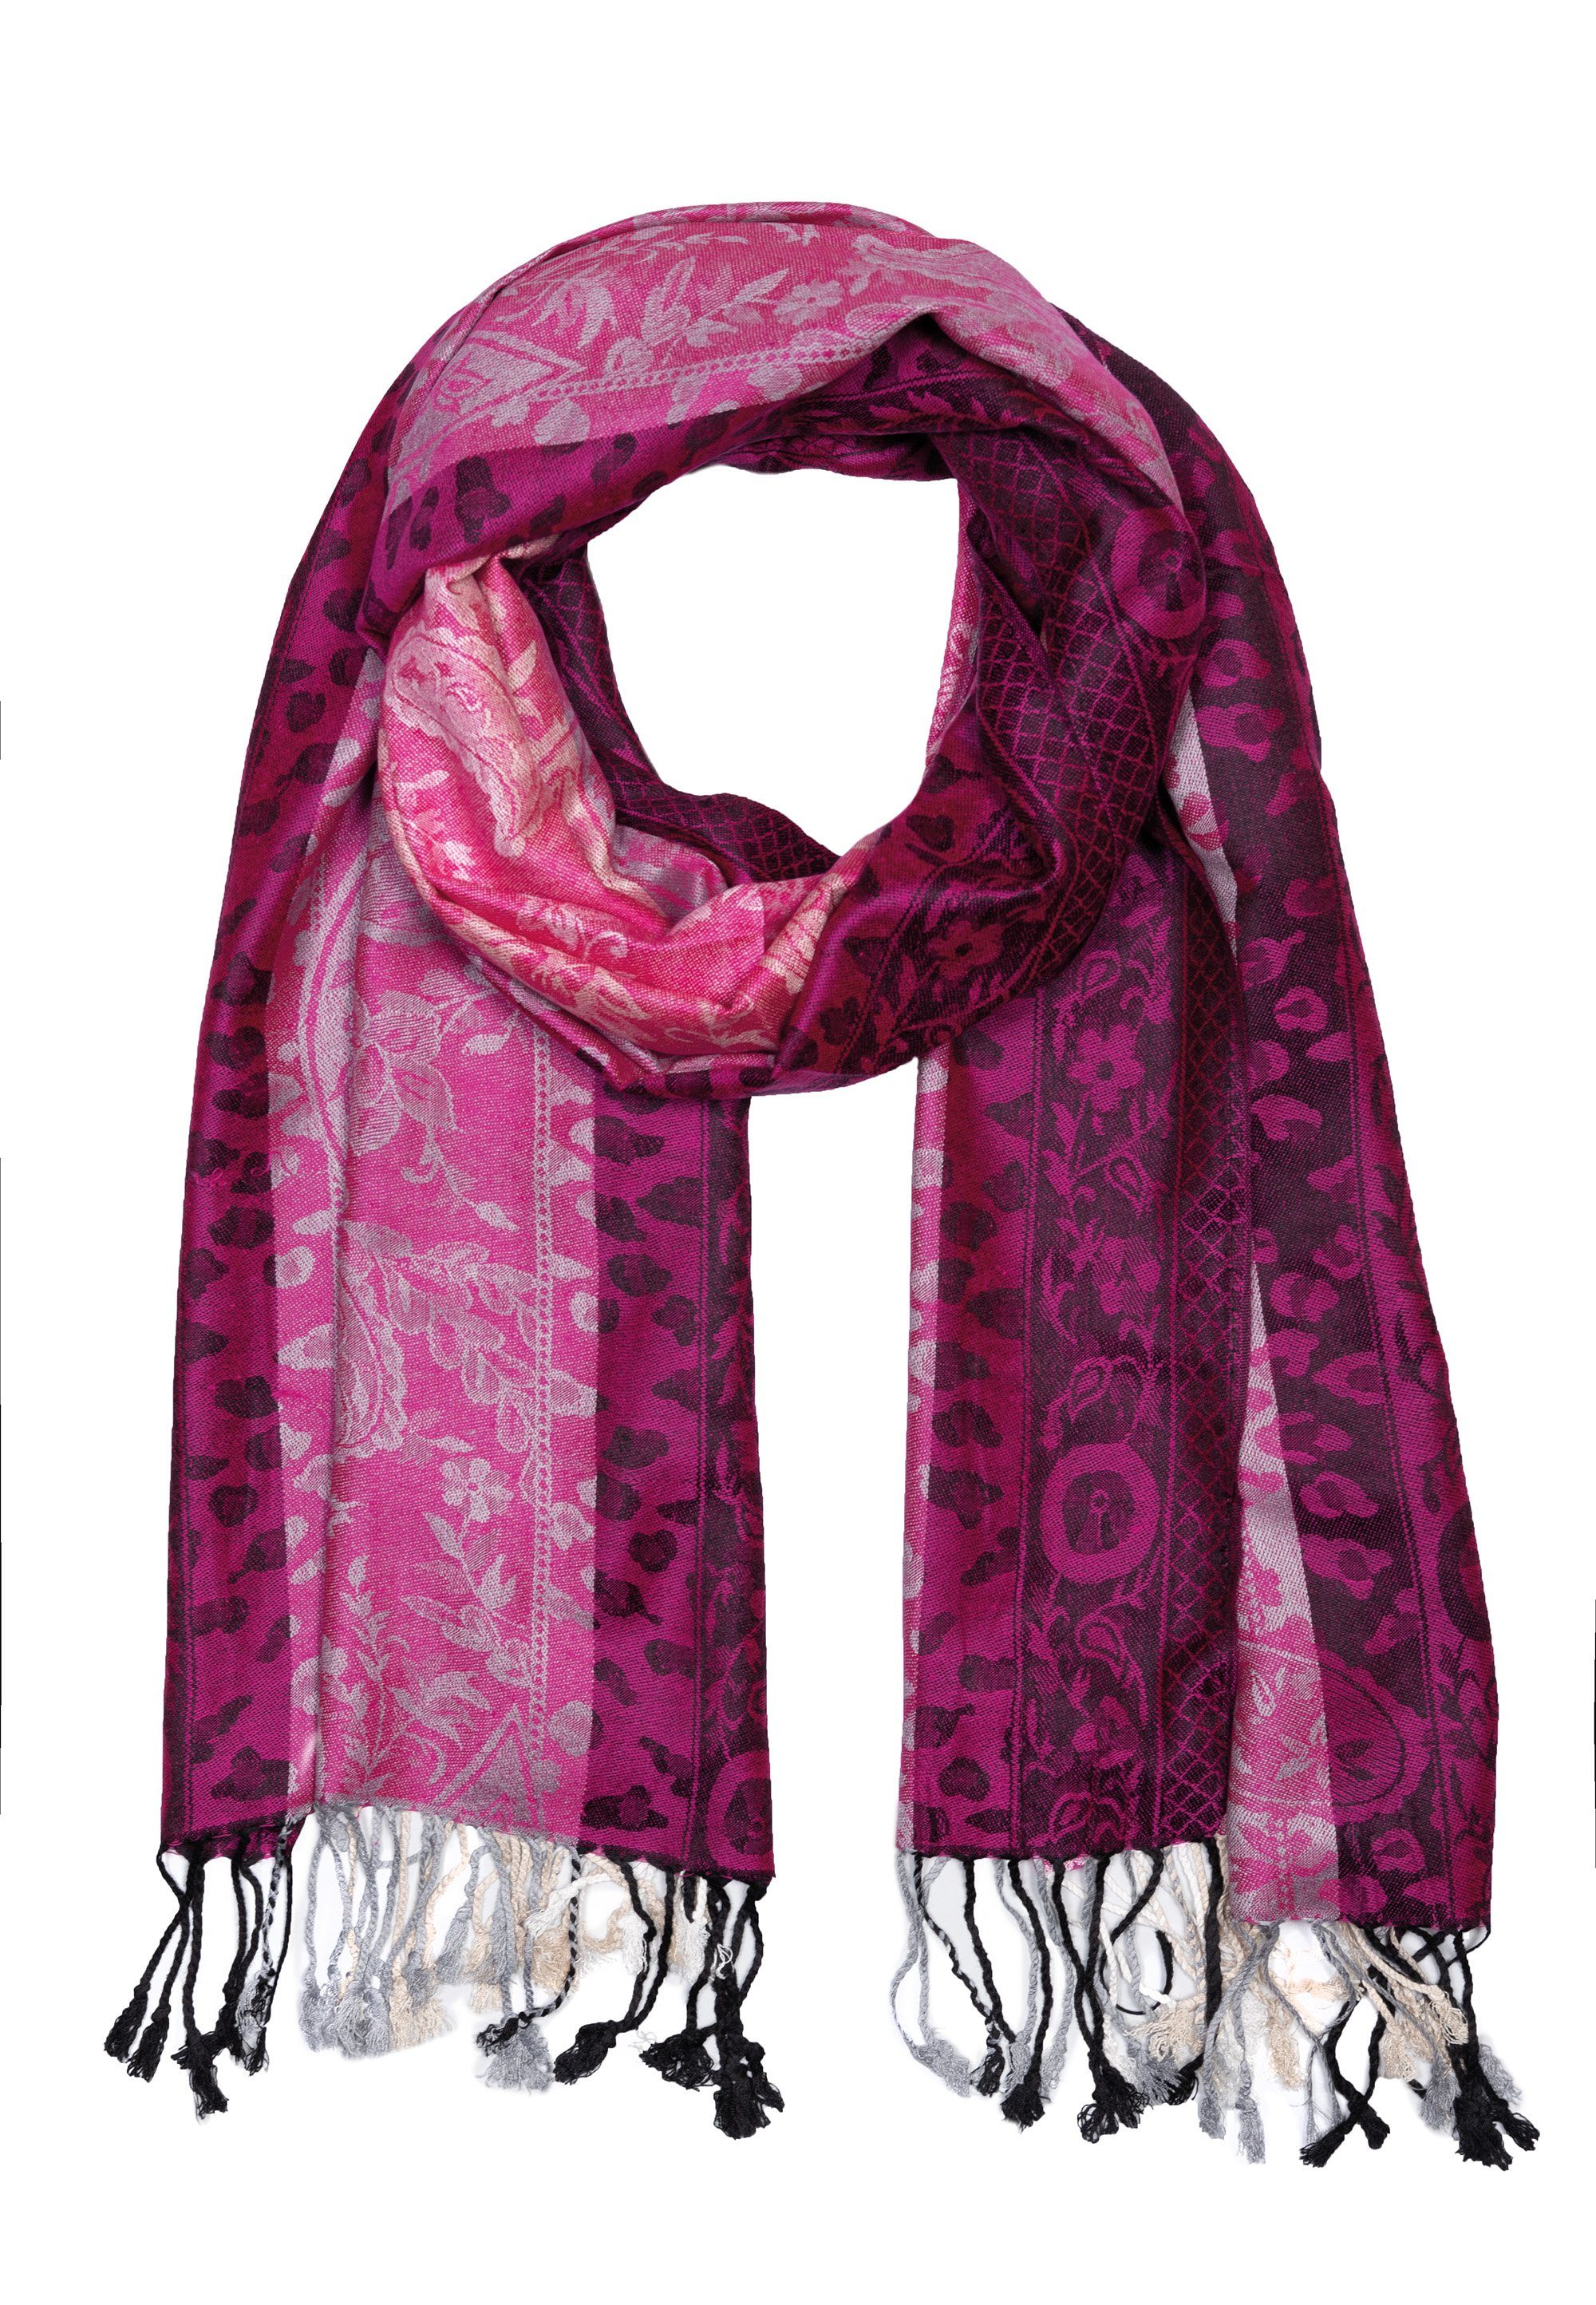 Goodman Design Modeschal Schal Romantik mit lebendigen Farben, Sehr hochwertiges Material Pink